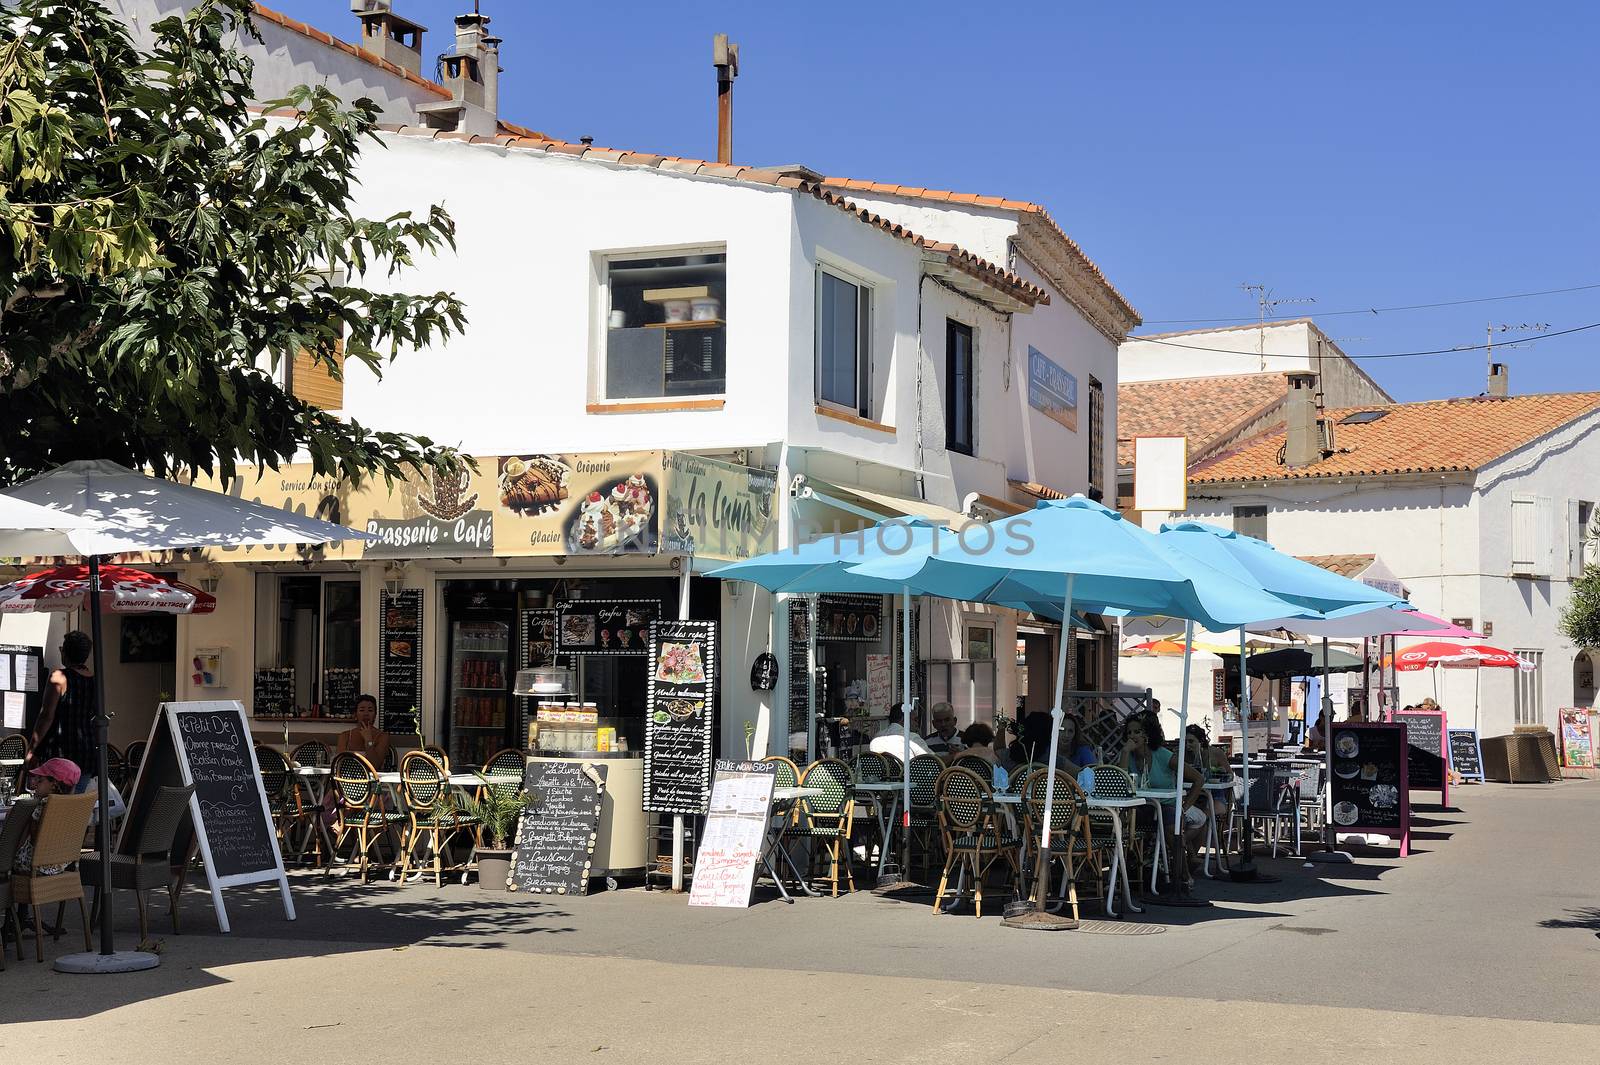 coffee shop in the city center of Saintes-Maries-de-la-Mer by gillespaire